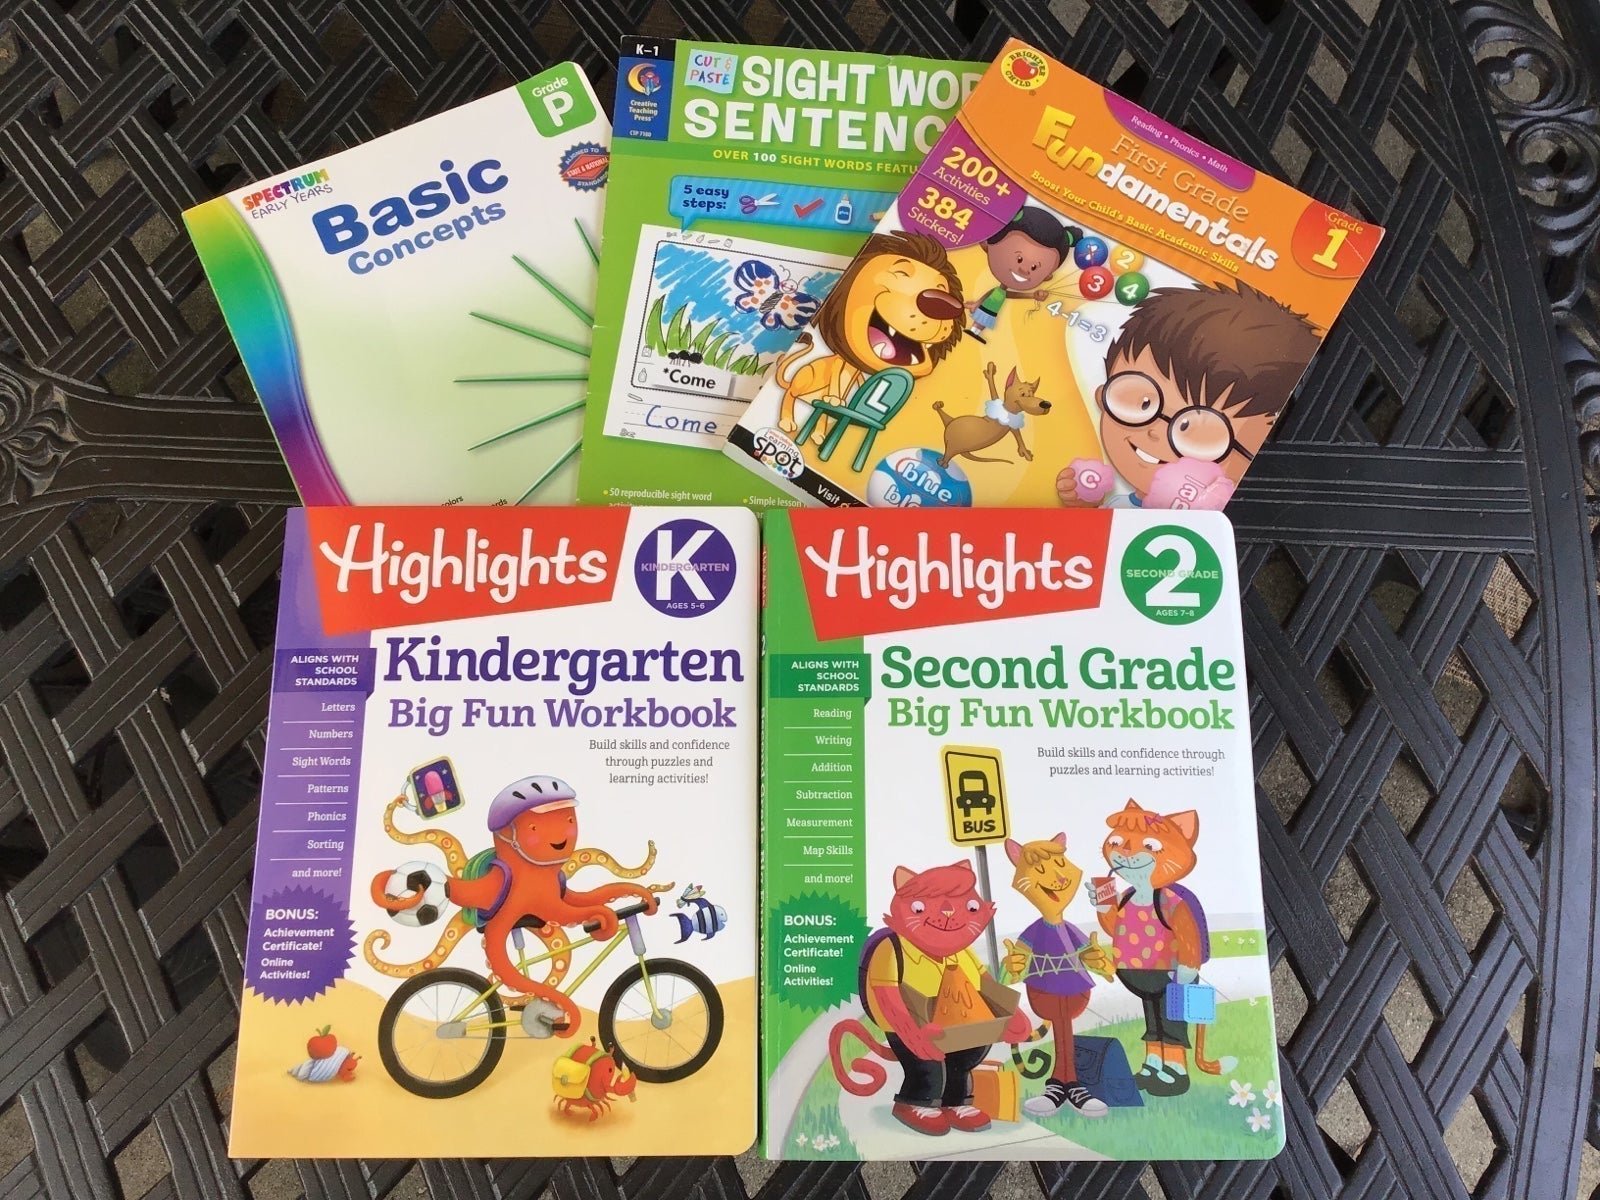 Highlights Educational Workbooks for Grades K-2 DAQ6lc0Zh